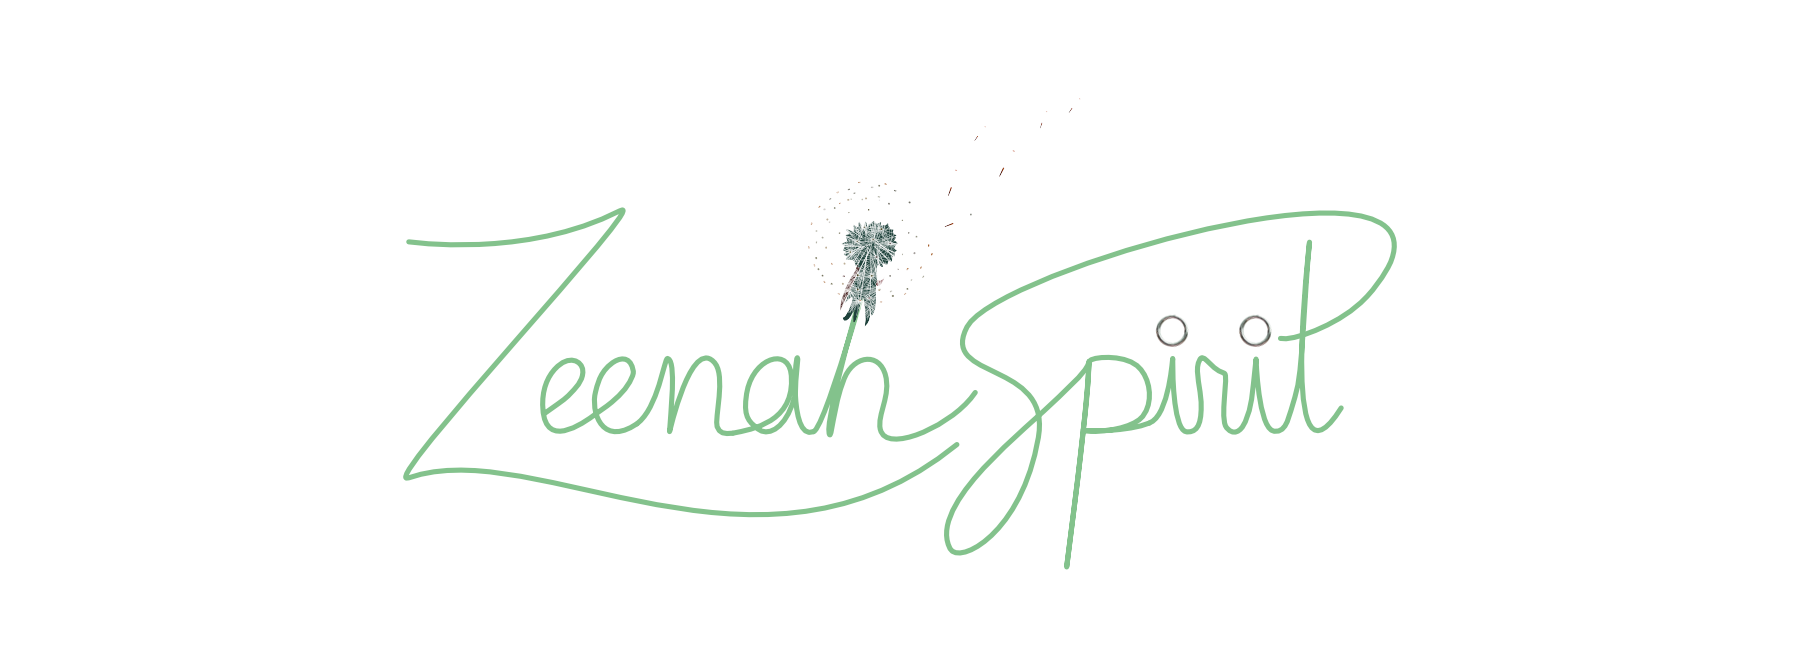 Zeenah Spirit logo